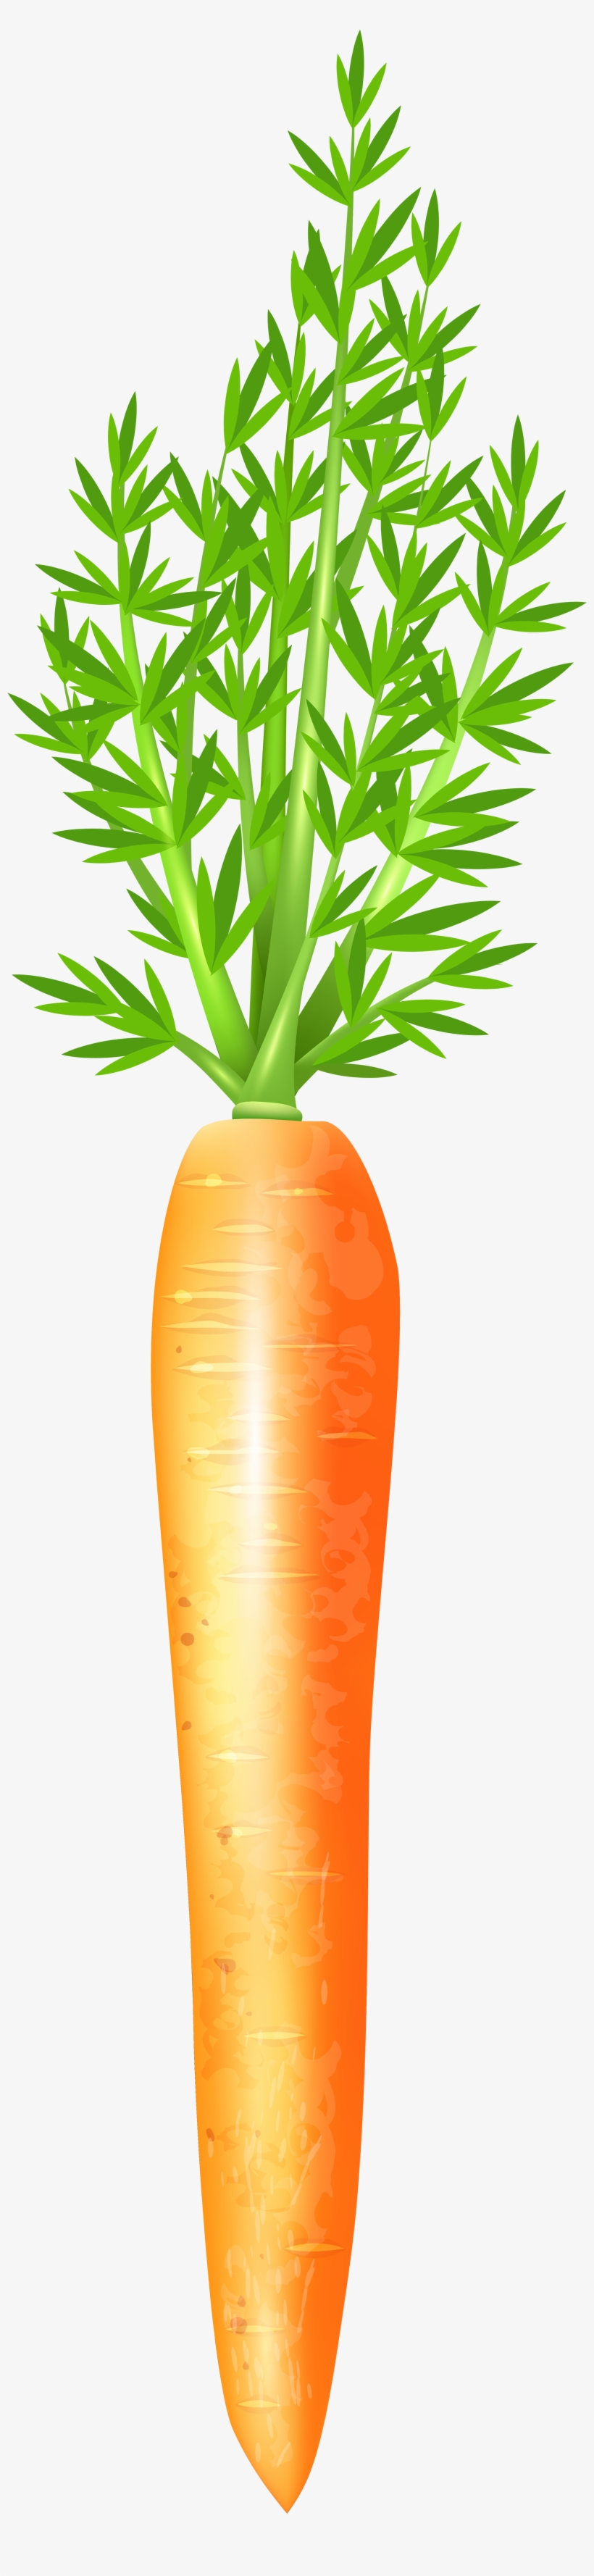 Carrot Clipart Frame - Carrot, transparent png #1692551